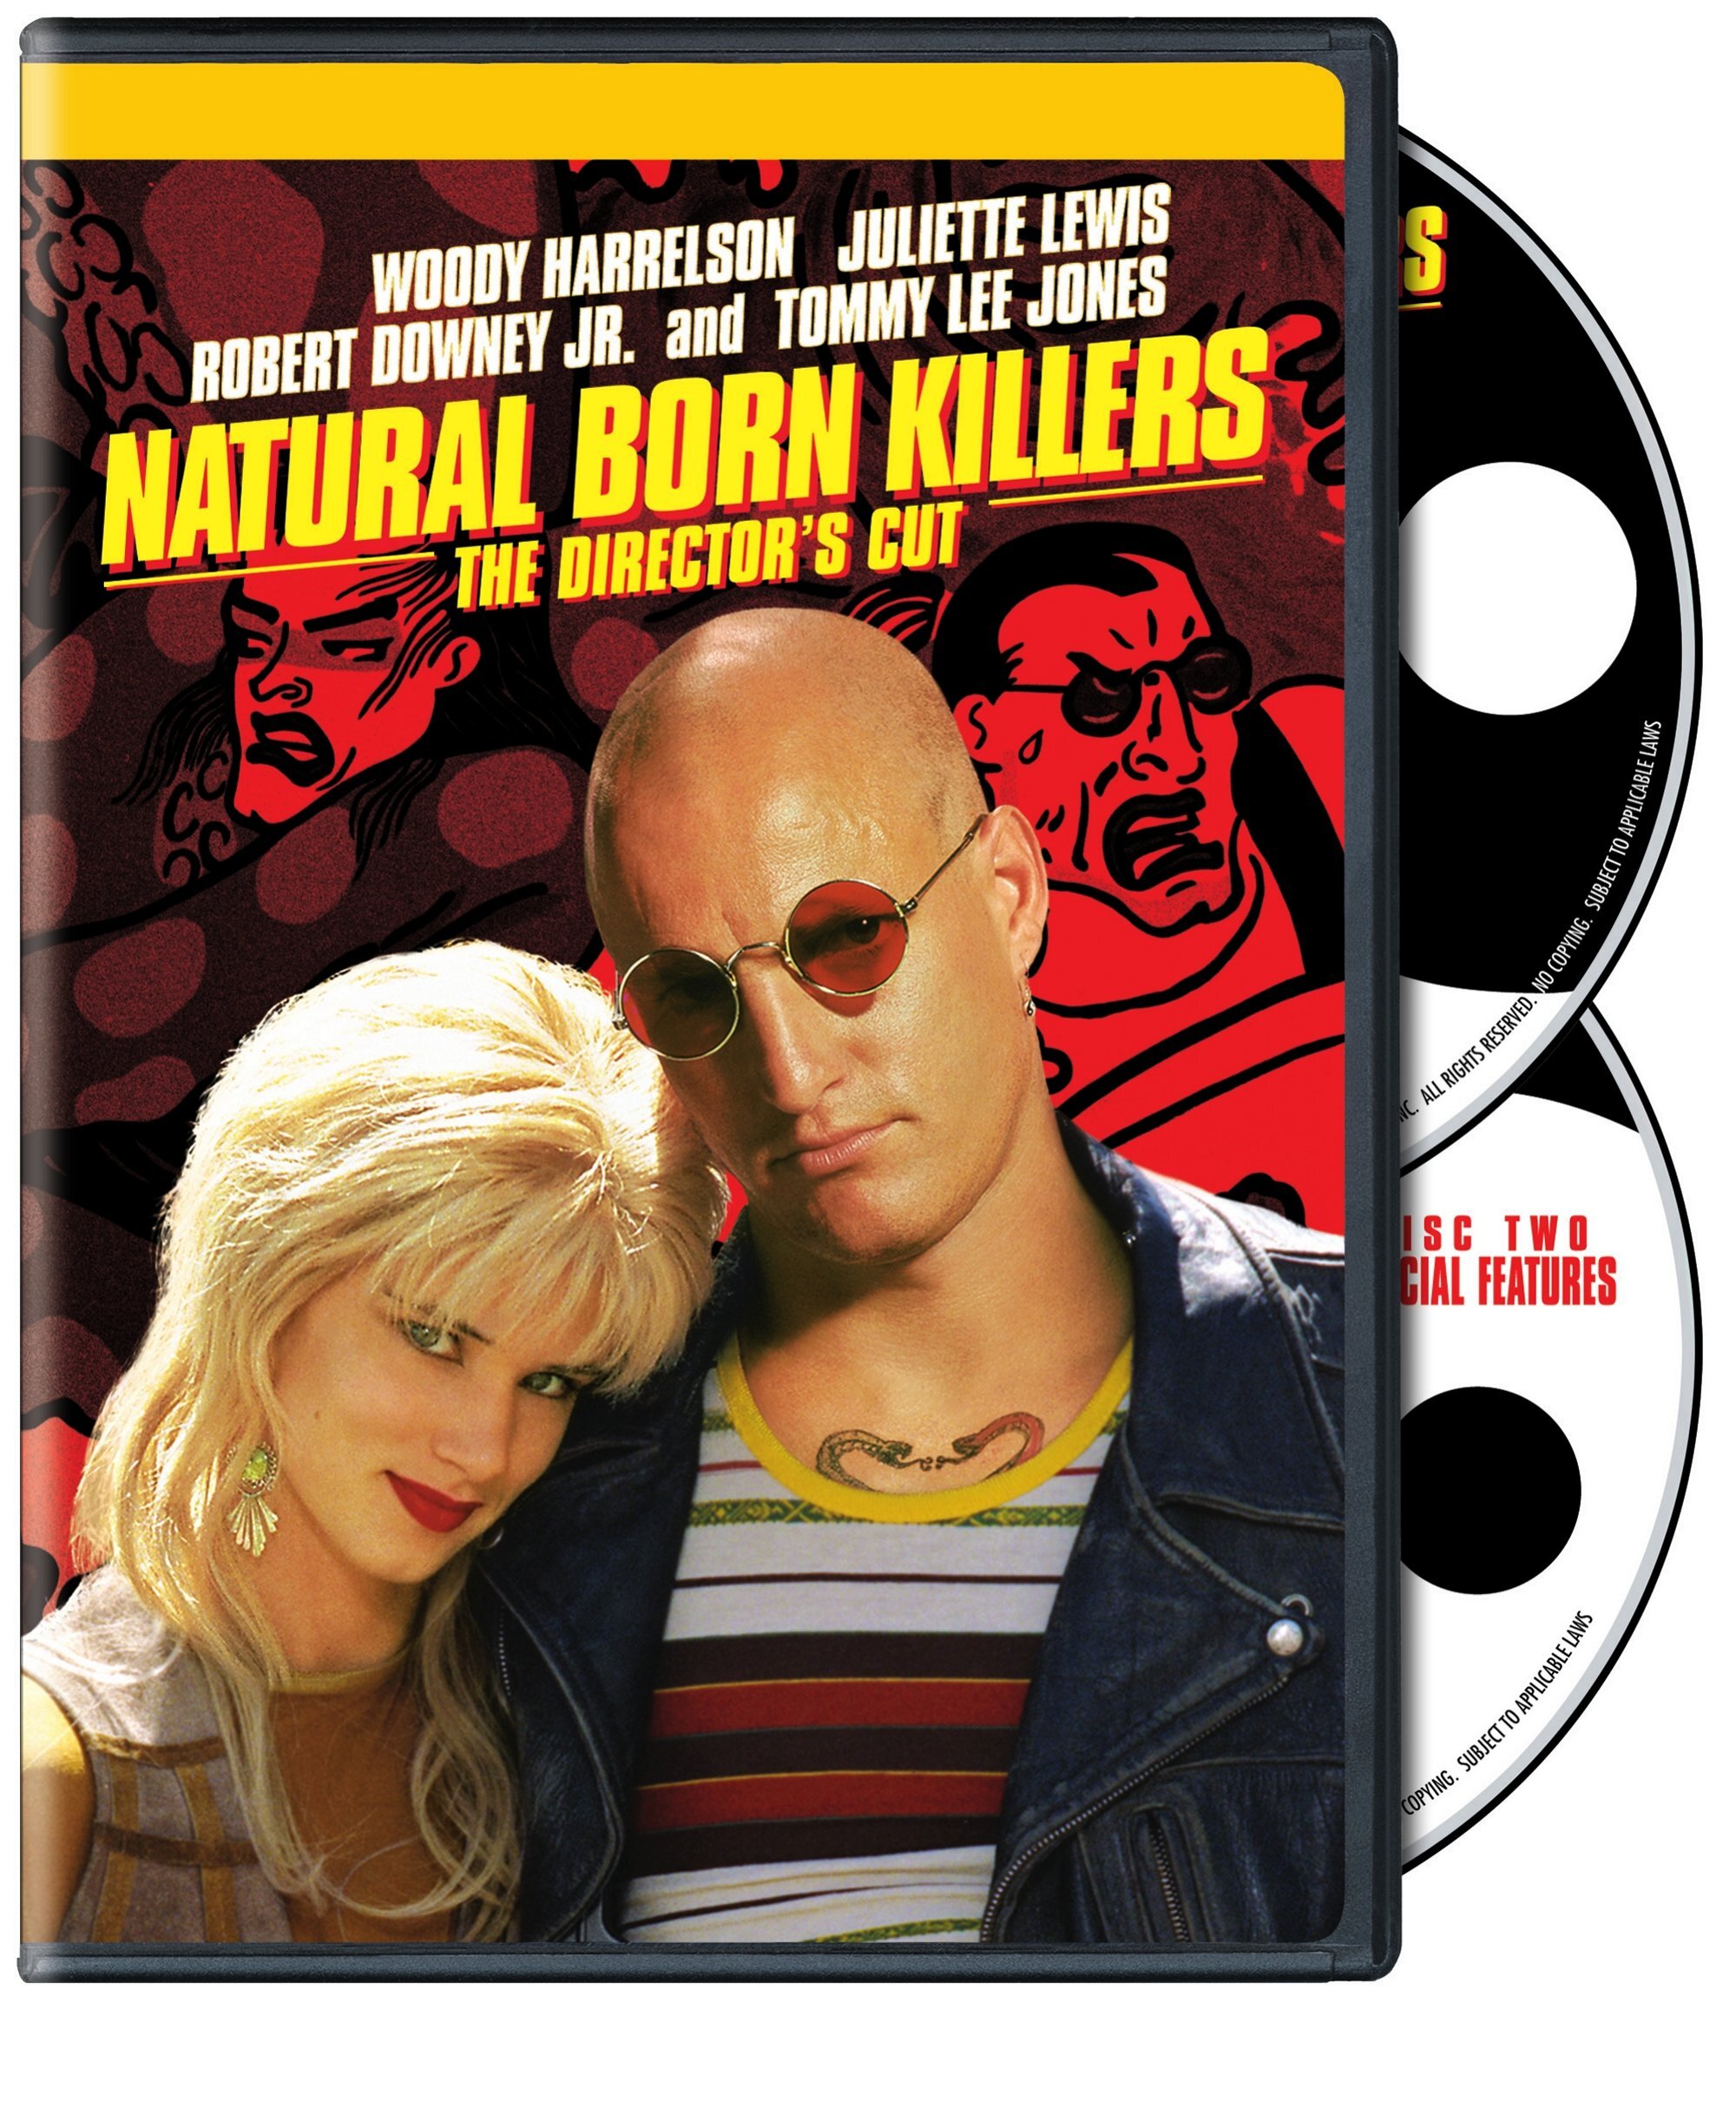 Natural Born Killers: Director's Cut (DVD Director's Cut) - DVD [ 1994 ]  - Drama Movies On DVD - Movies On GRUV